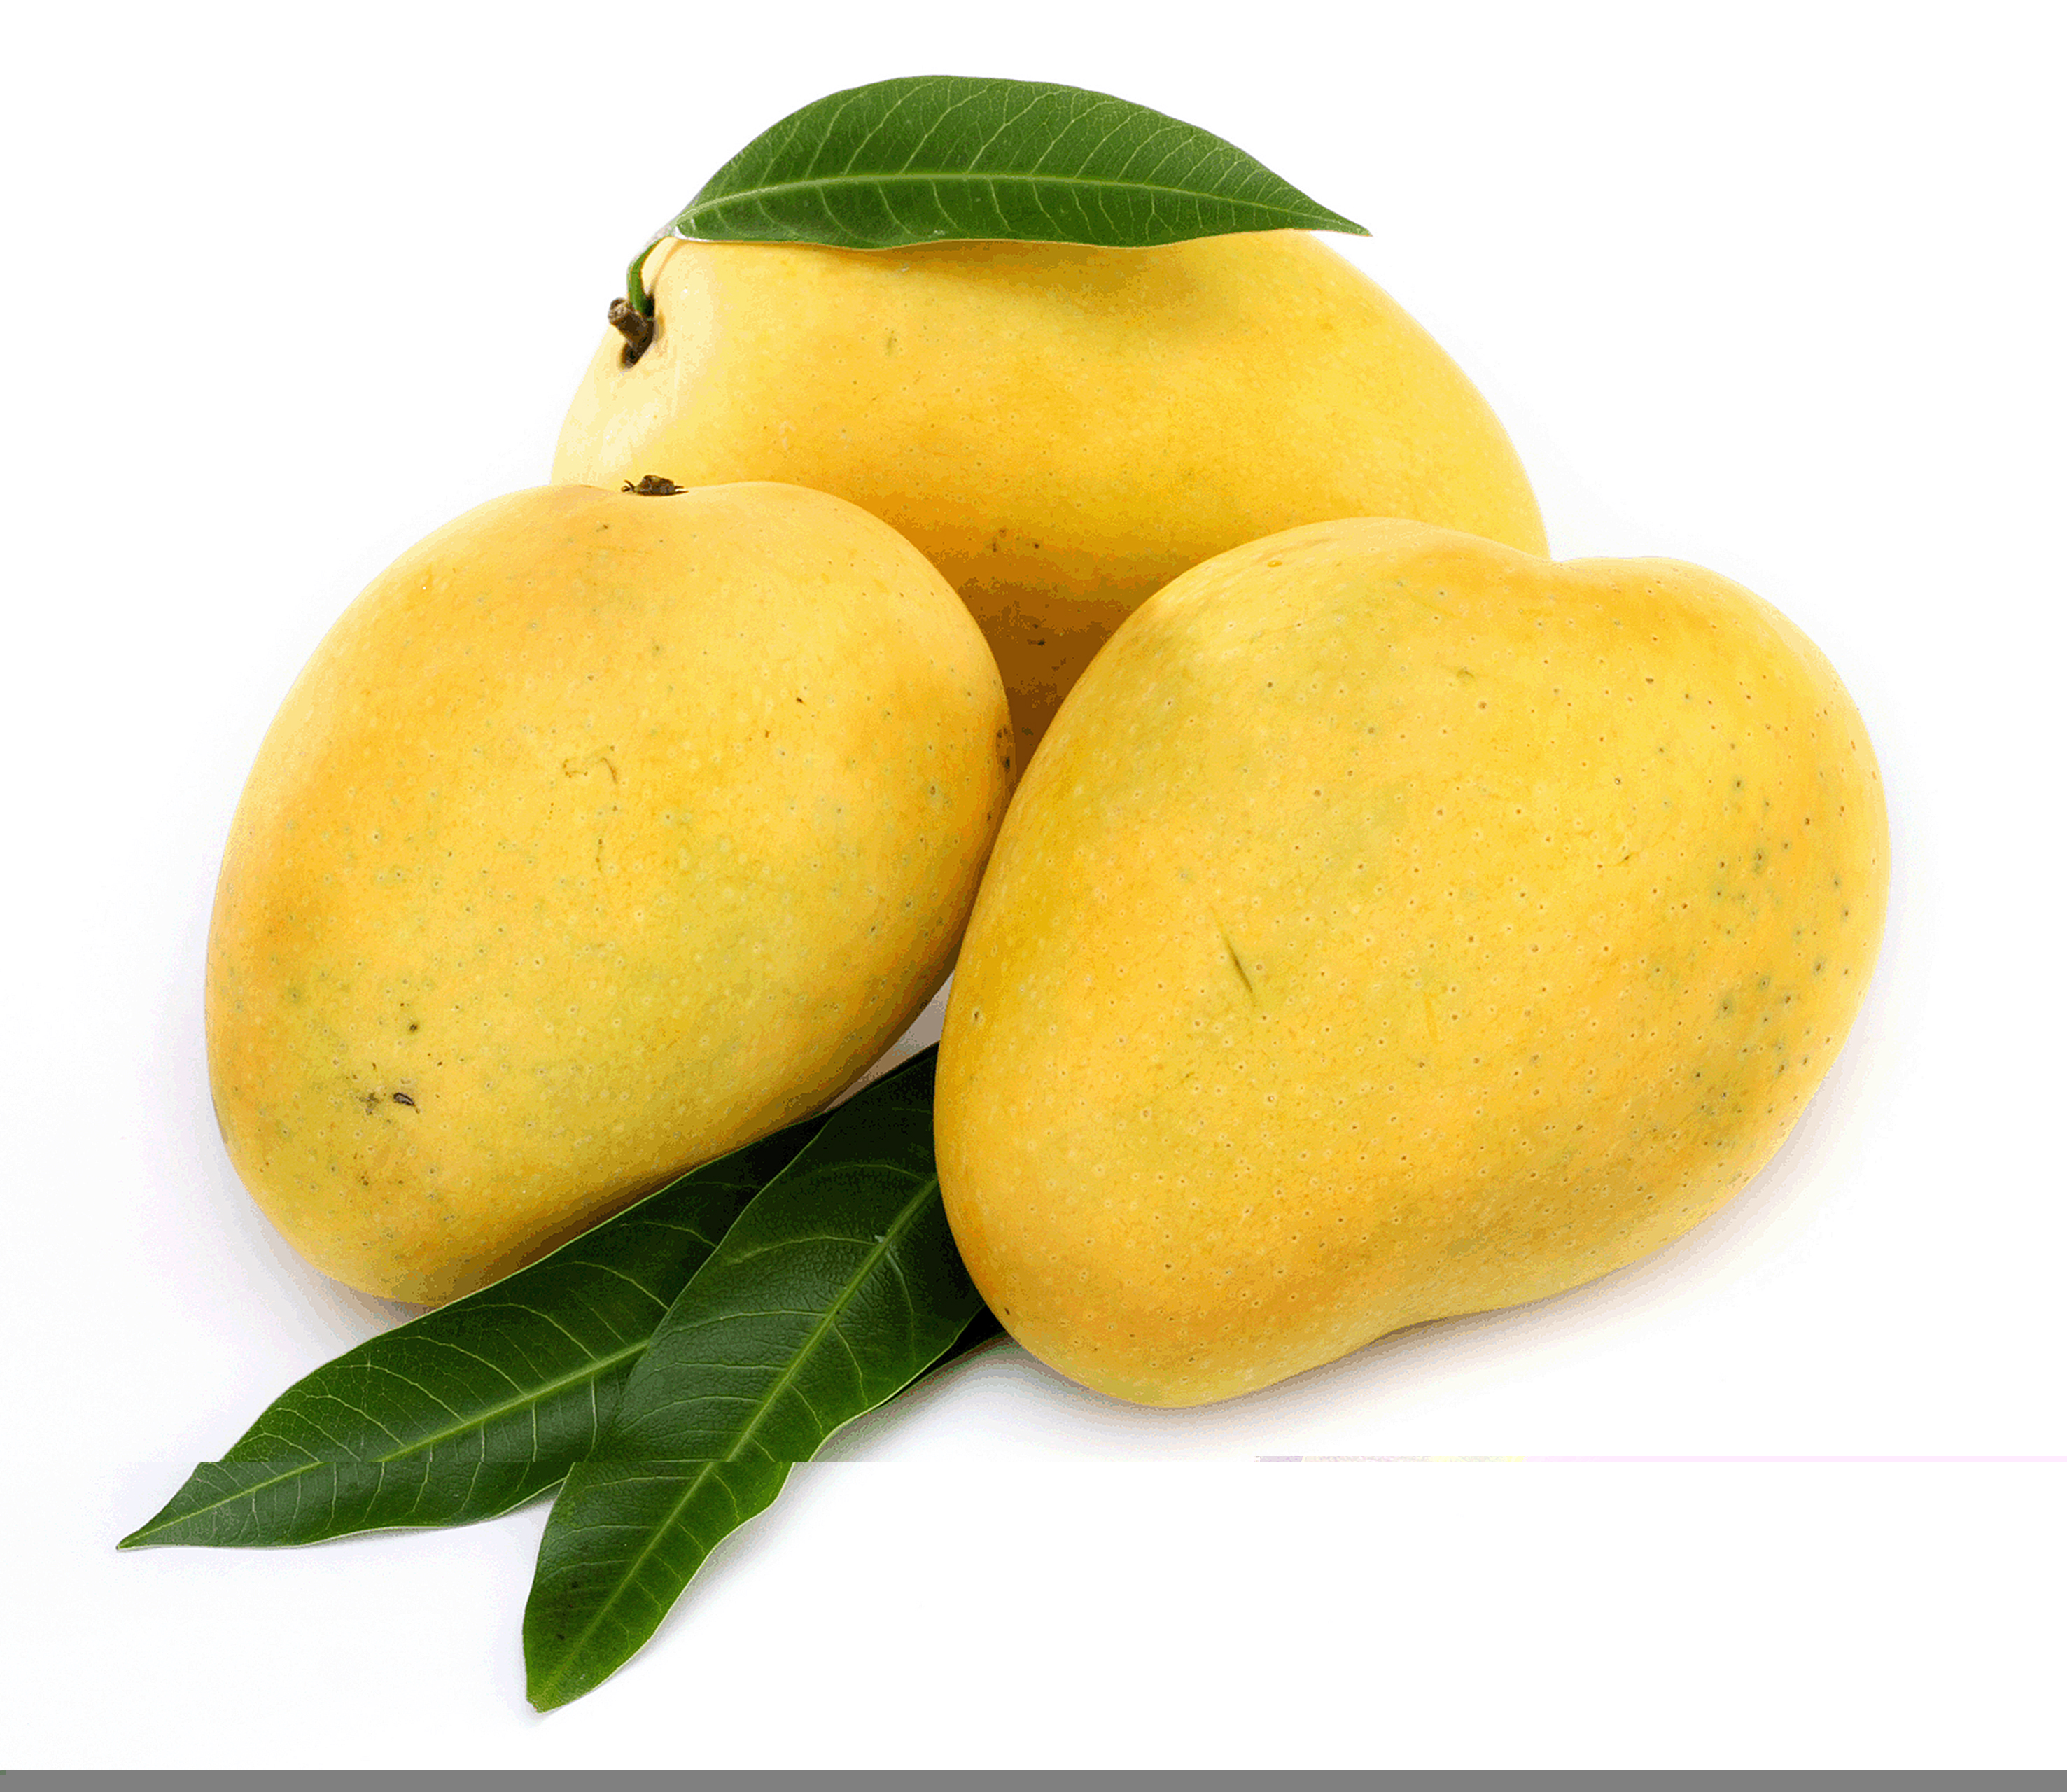 Amazing Mango Pictures & Backgrounds